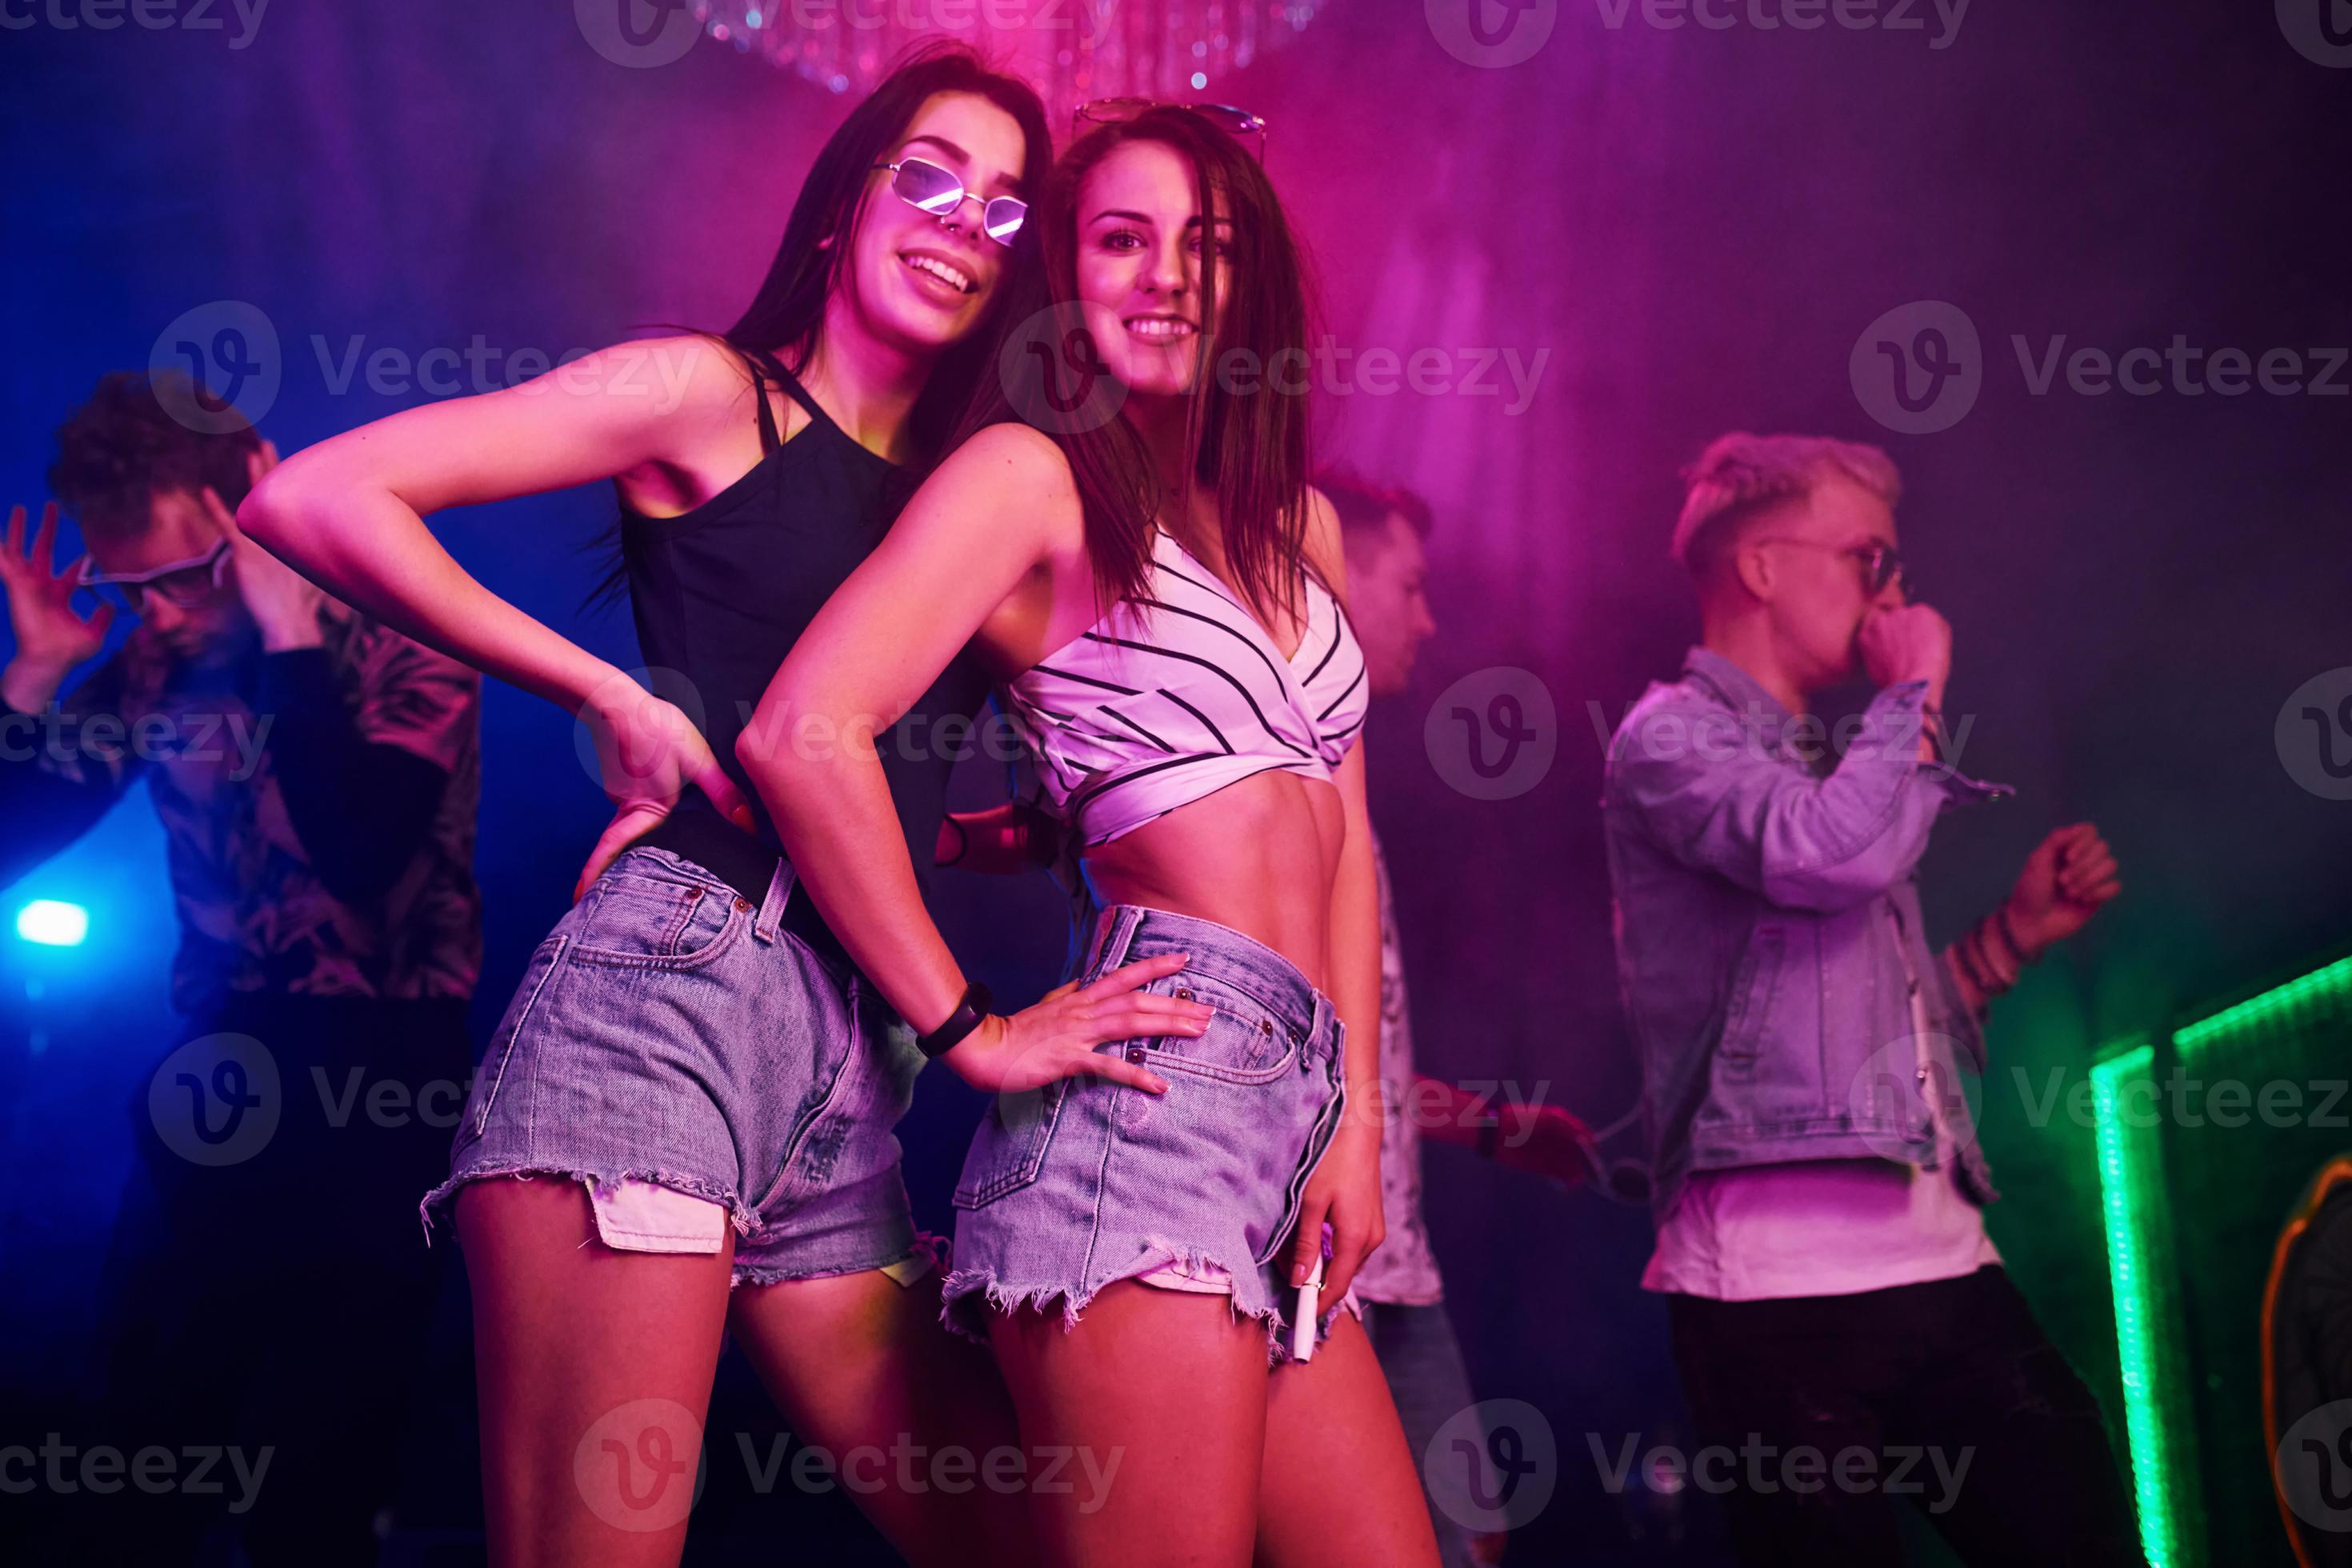 Best of Girls dancing in club